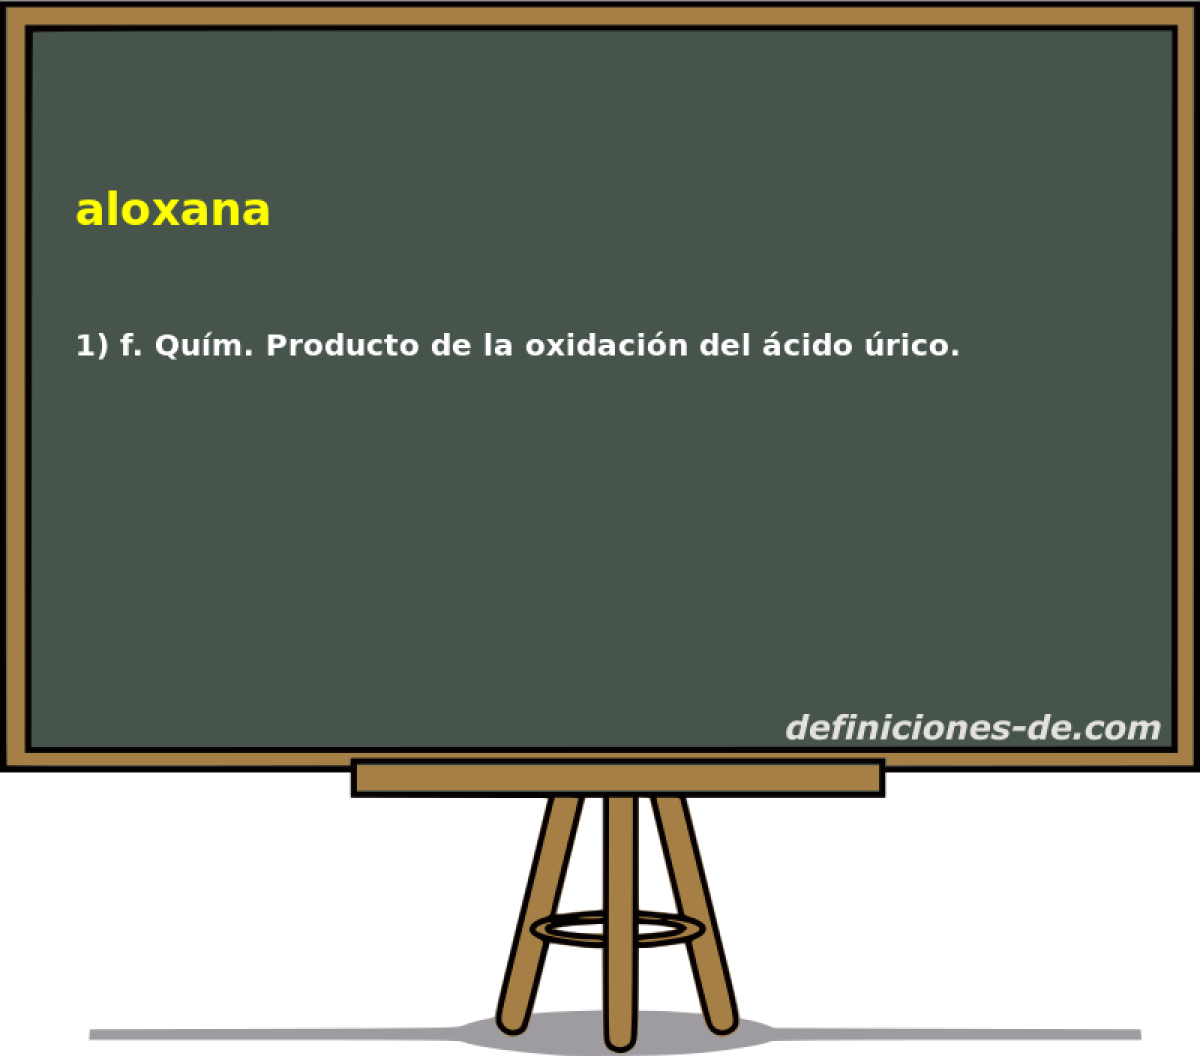 aloxana 